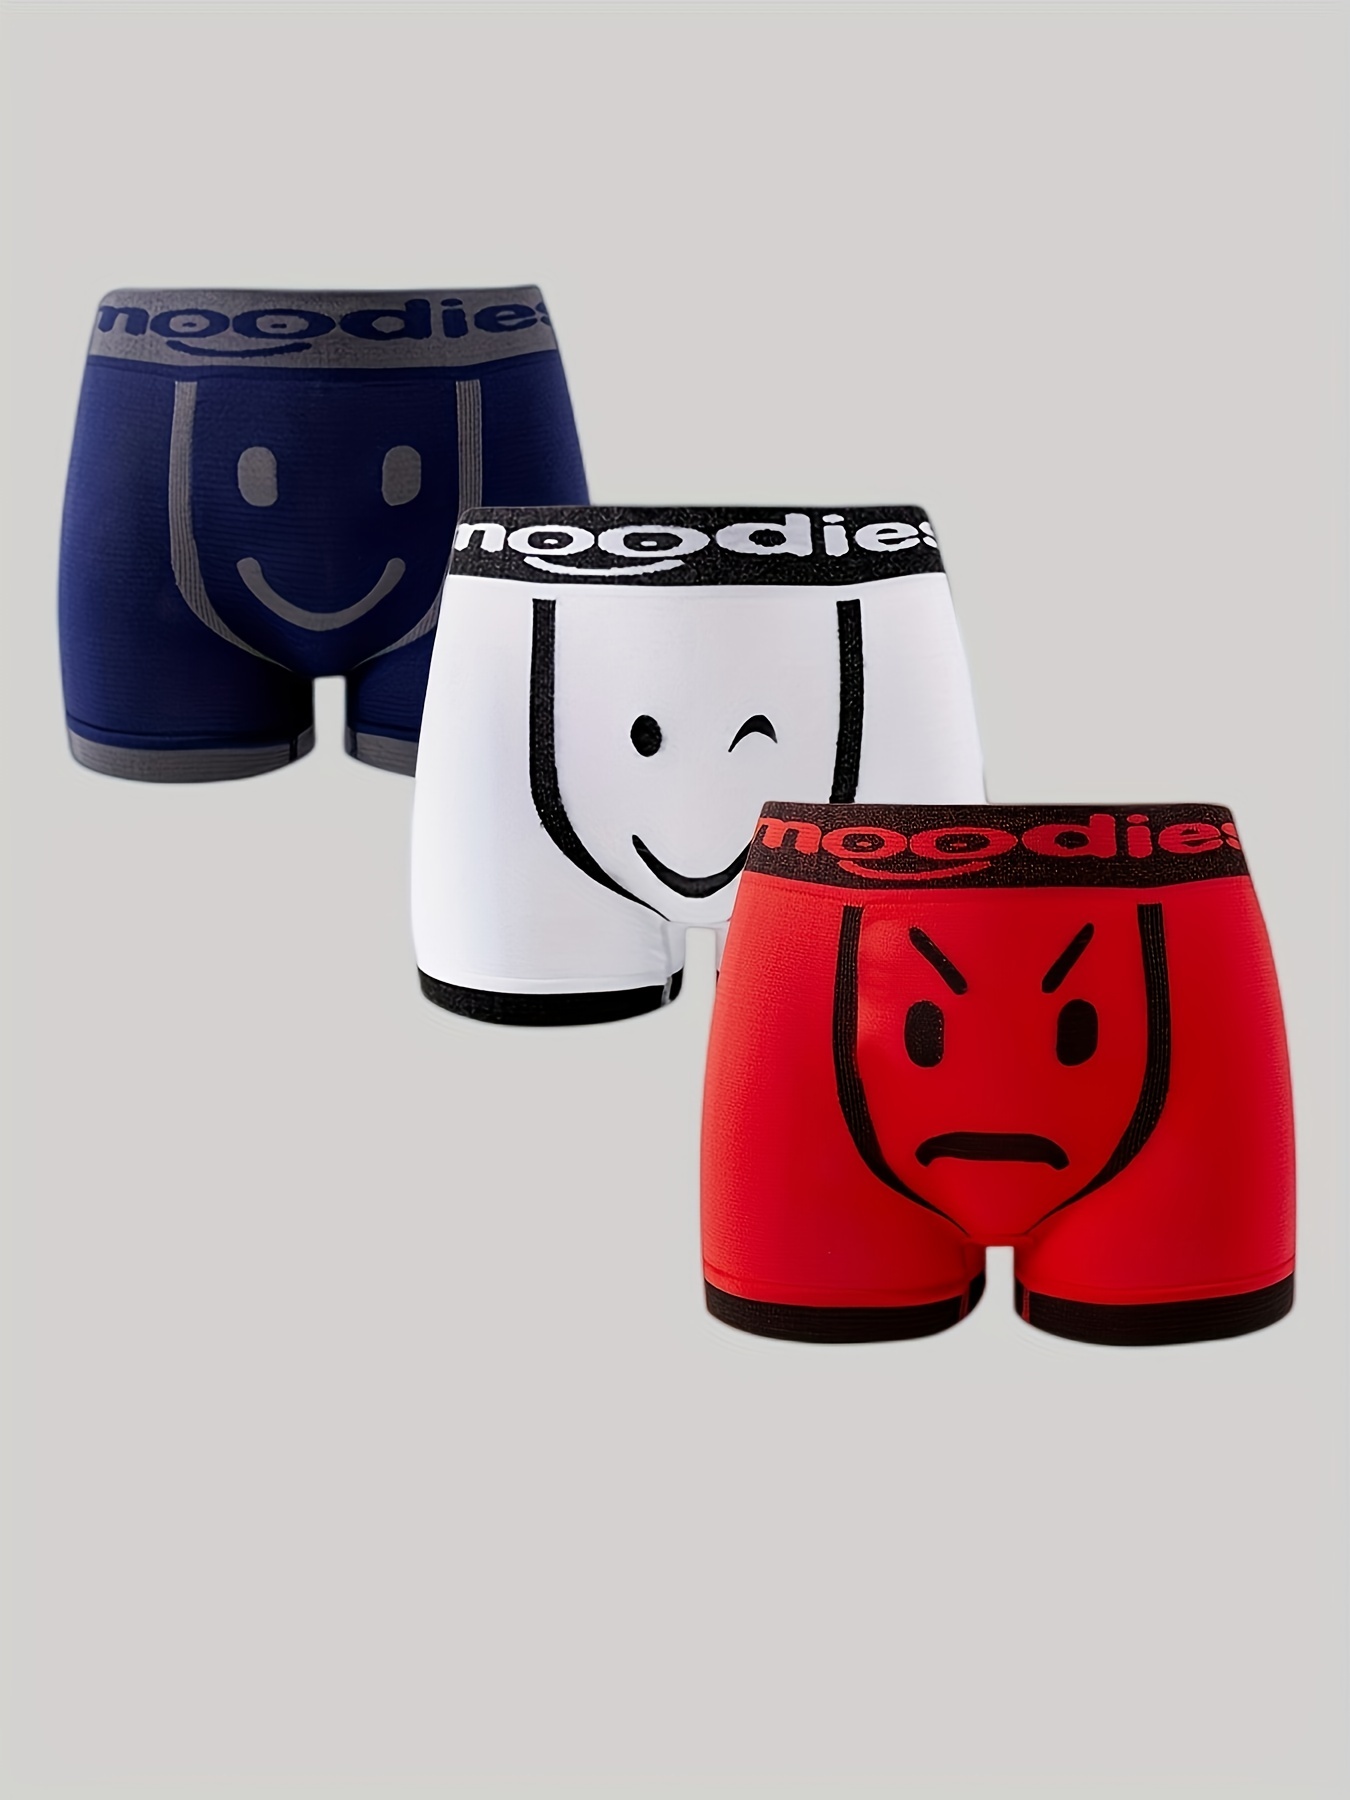 PSD Men's All Over Sommer Boxer Brief Underwear - Multicoloured